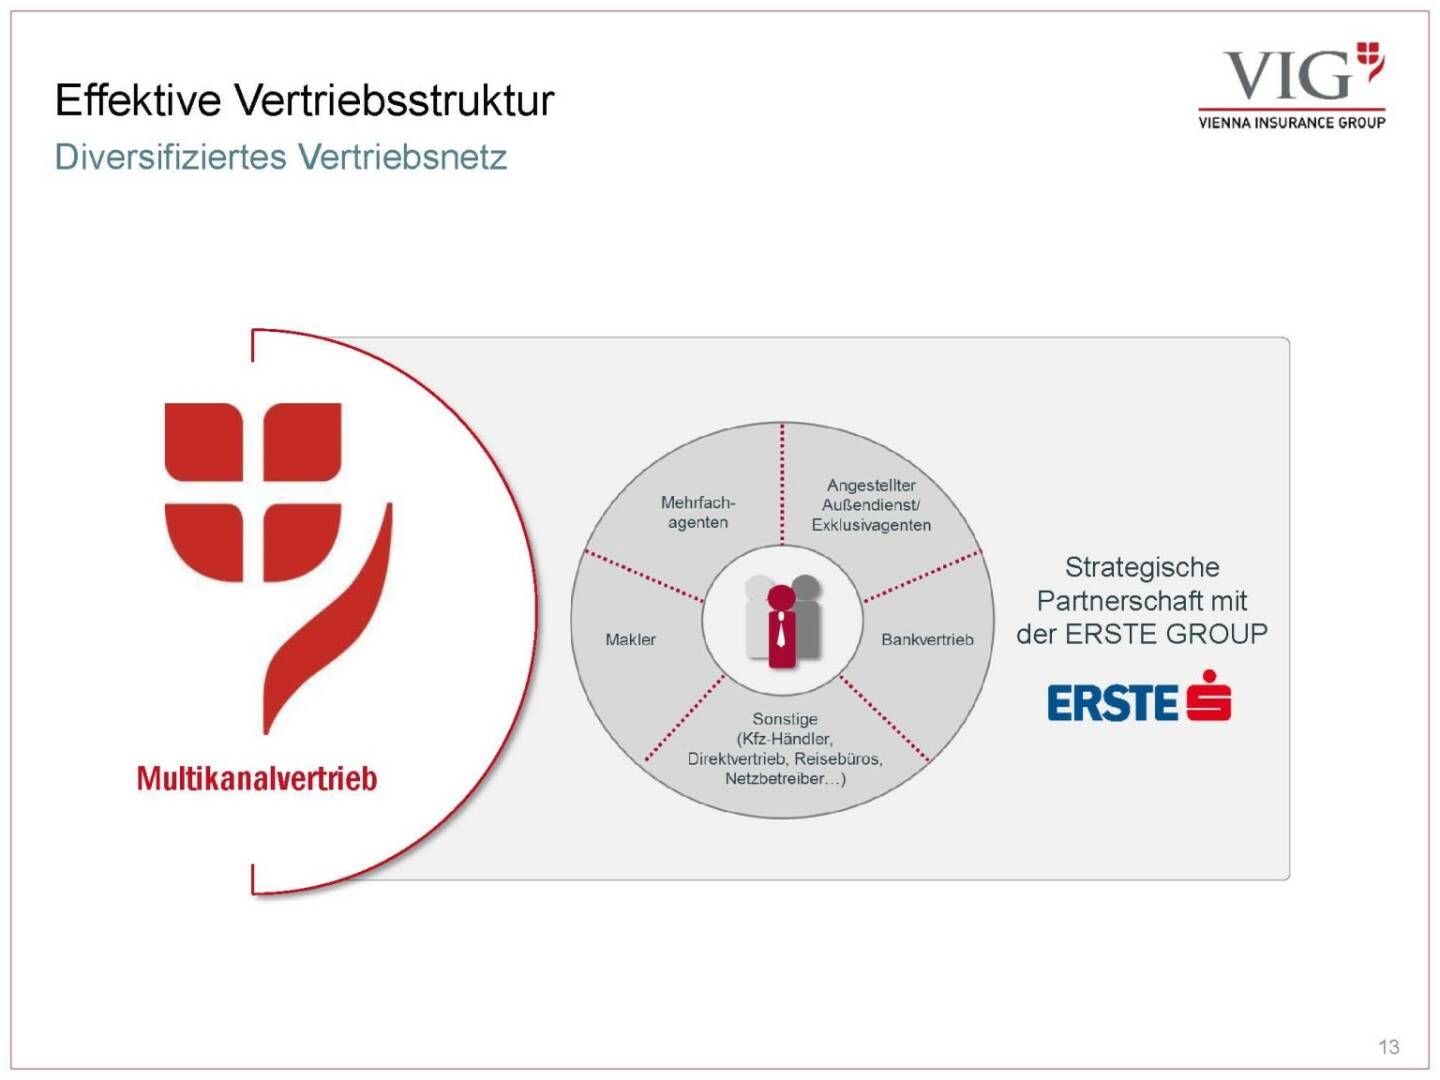 Vienna Insurance Group - effektive Vertriebsstruktur